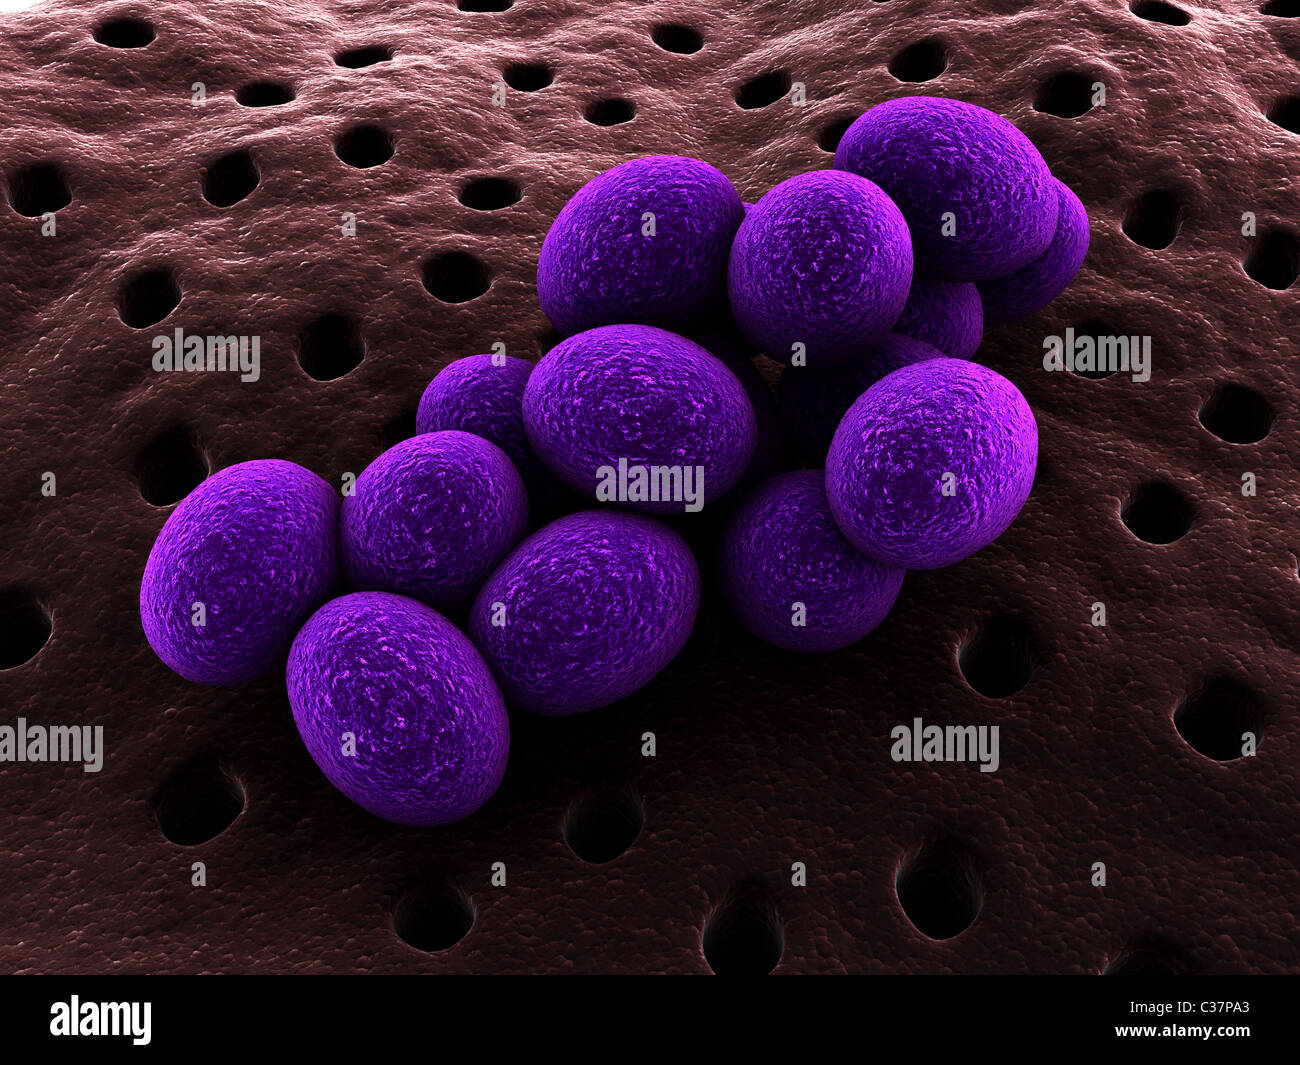 Staphylococcus Foto de stock